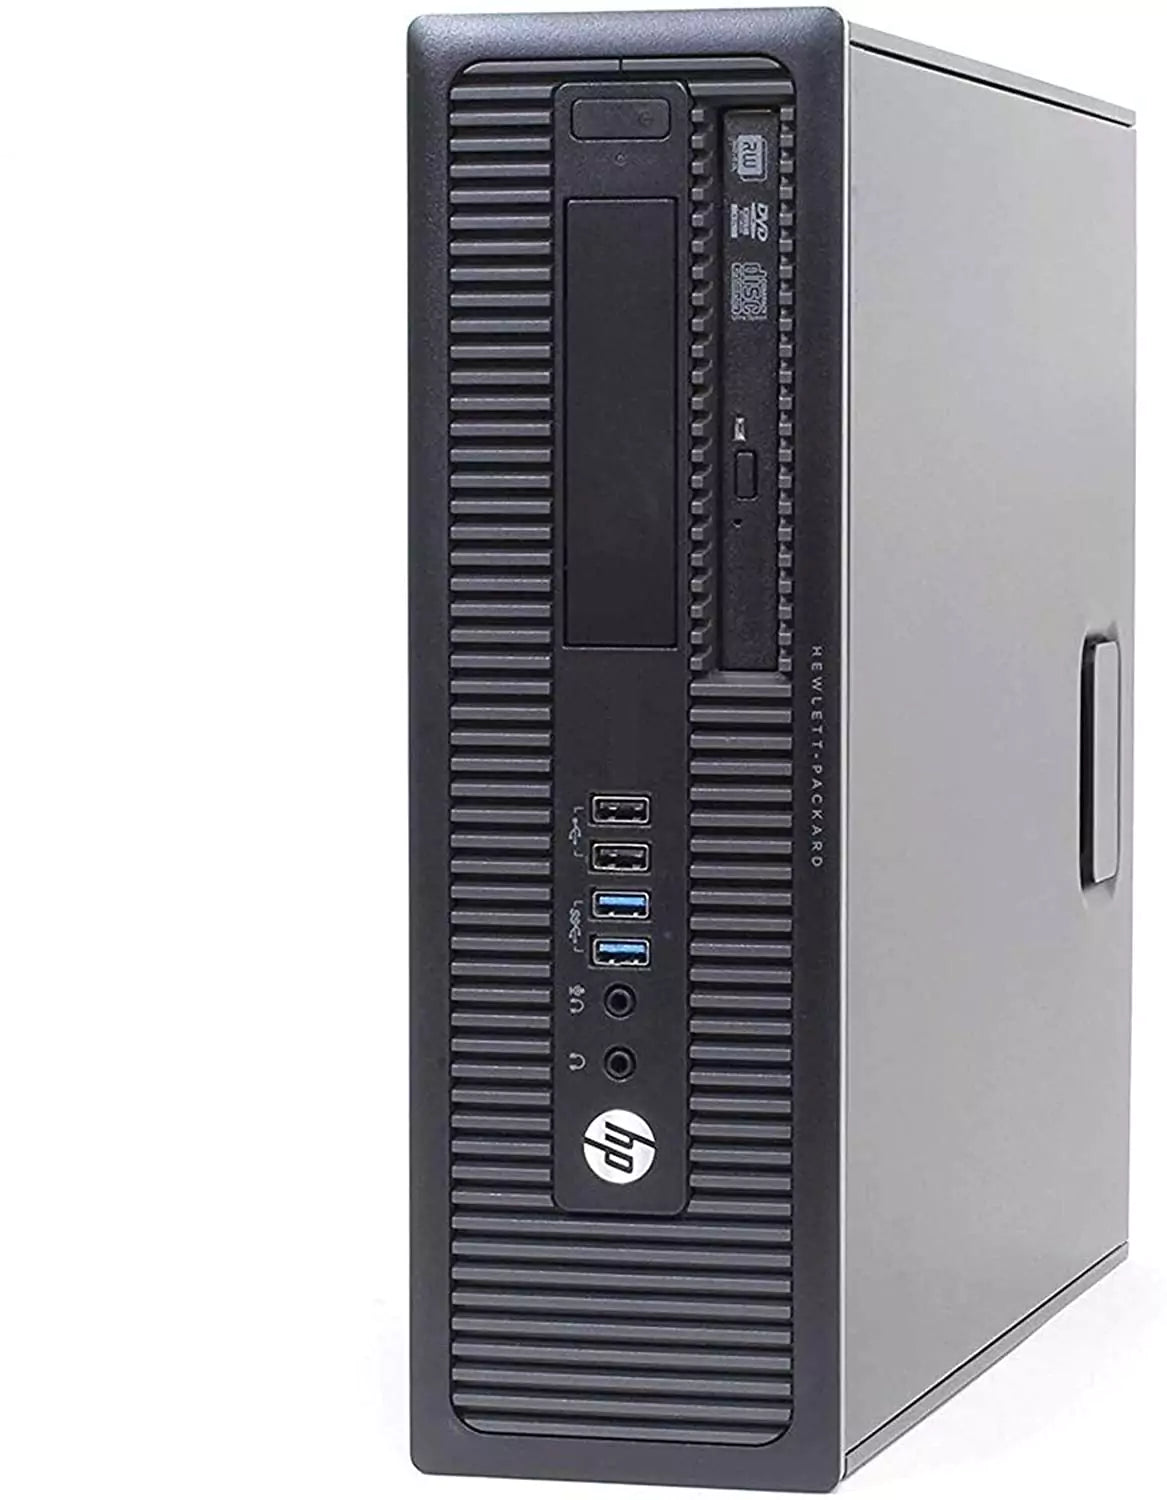 HP Prodesk 600 g1 SFF | Intel Pentium G3250 3.2Ghz | Ram 8Gb | Hard Disk 500Gb | Windows 10 Pro